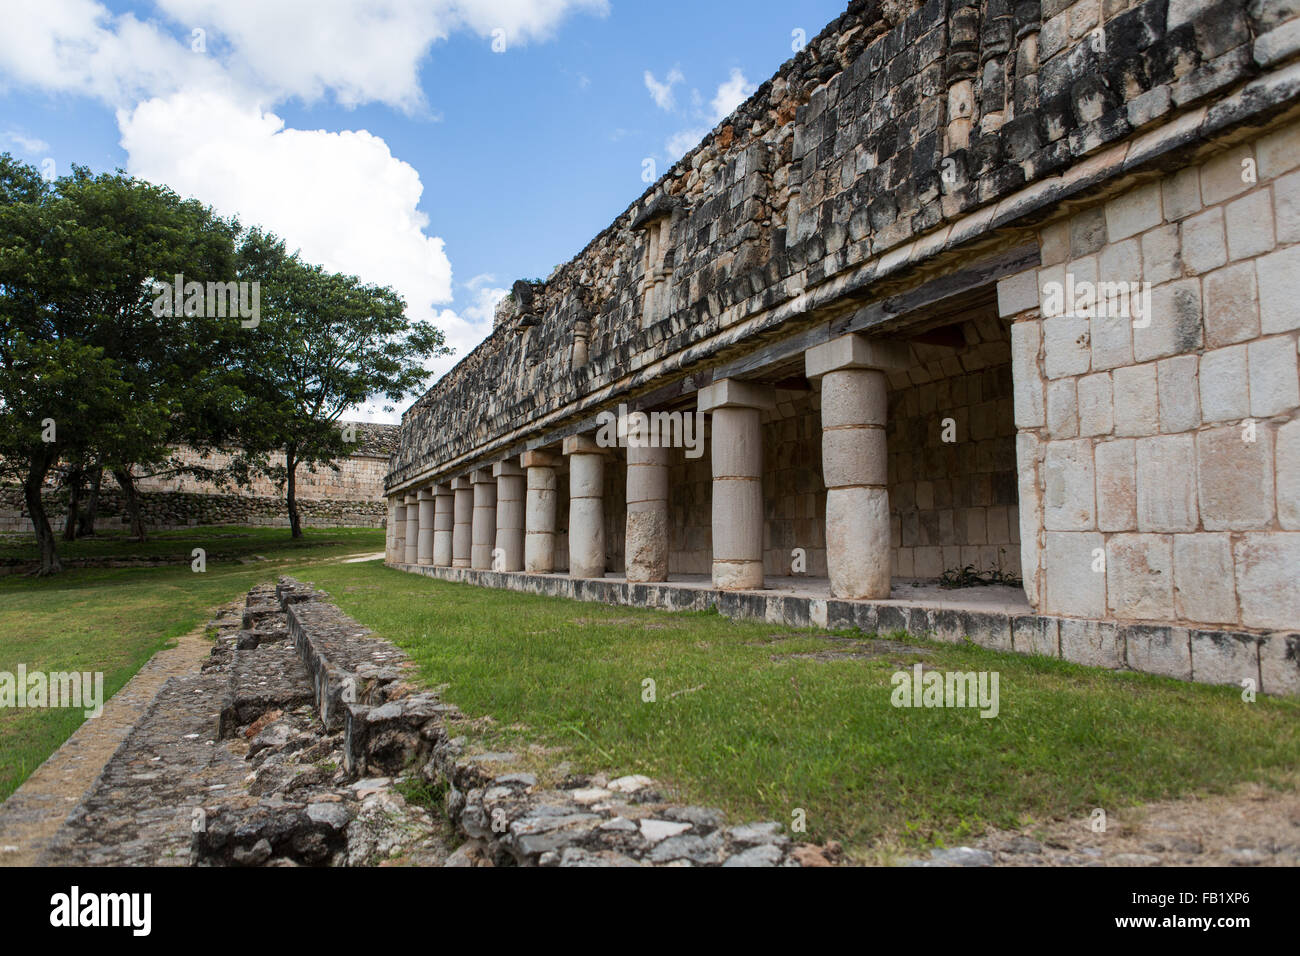 Ruins at Uxmal, Yucatan, Mexico. It is an ancient Maya city of the classical period. Stock Photo